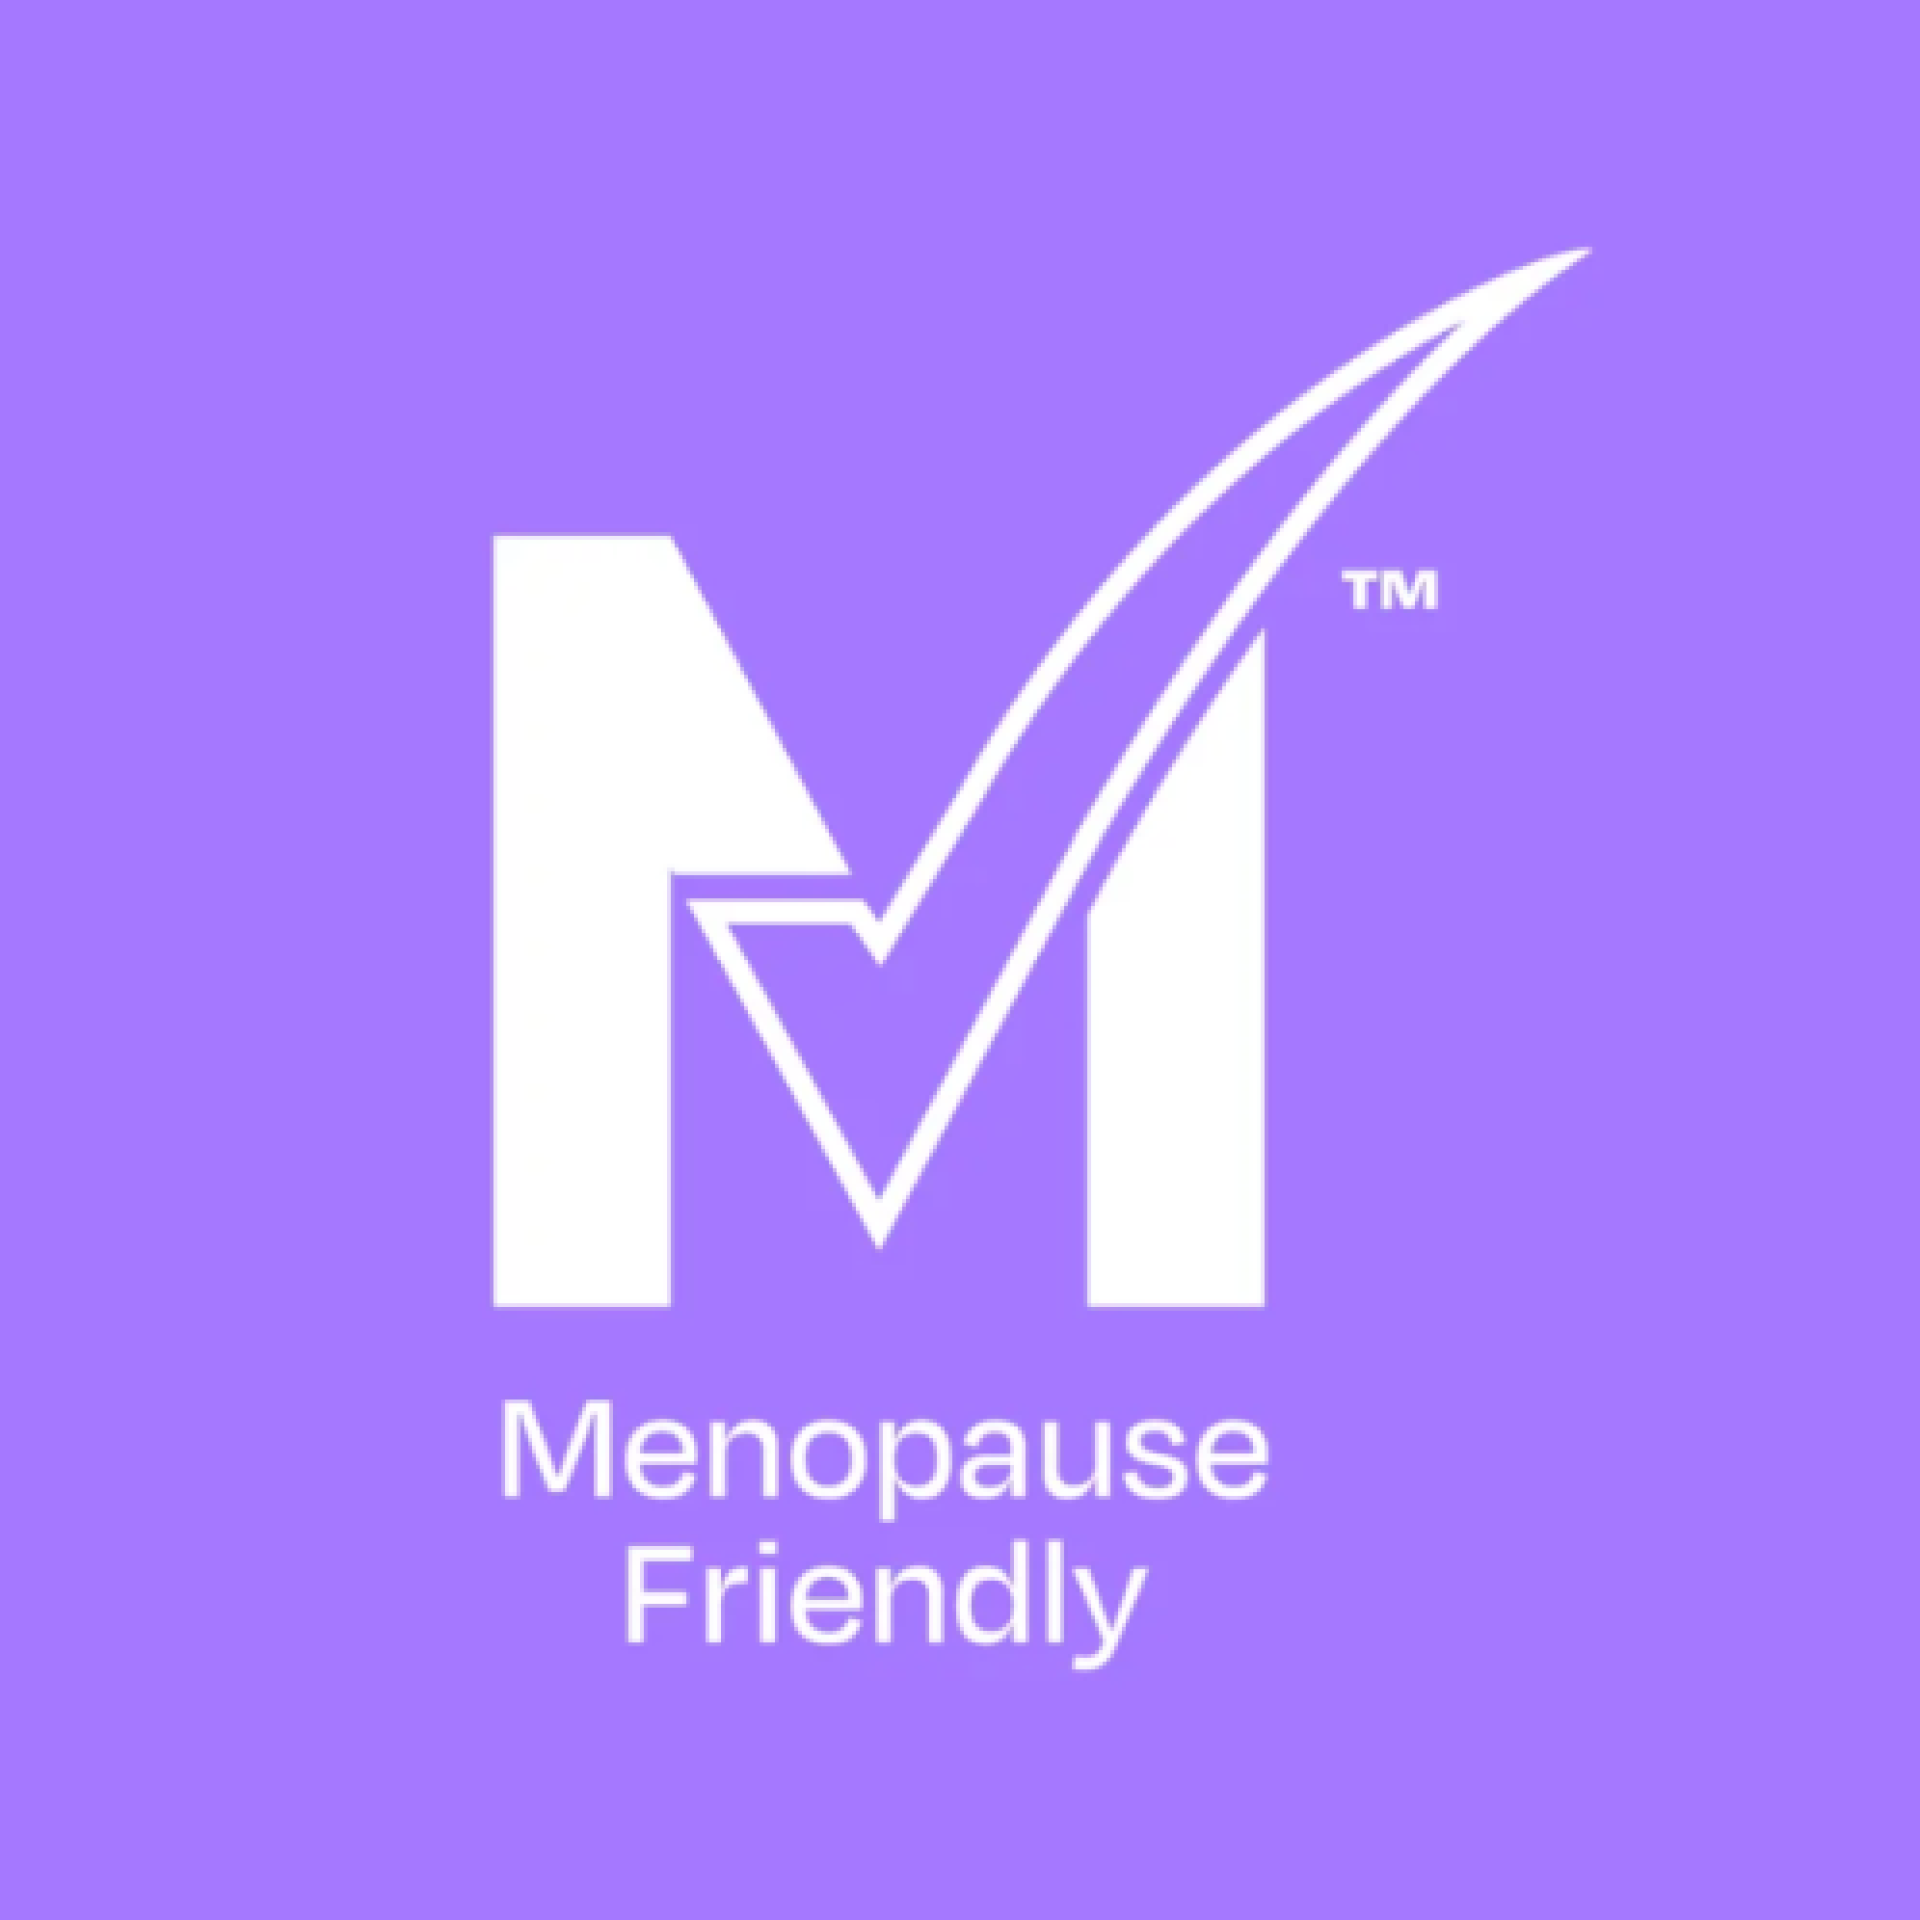 Gen m menopause friendly